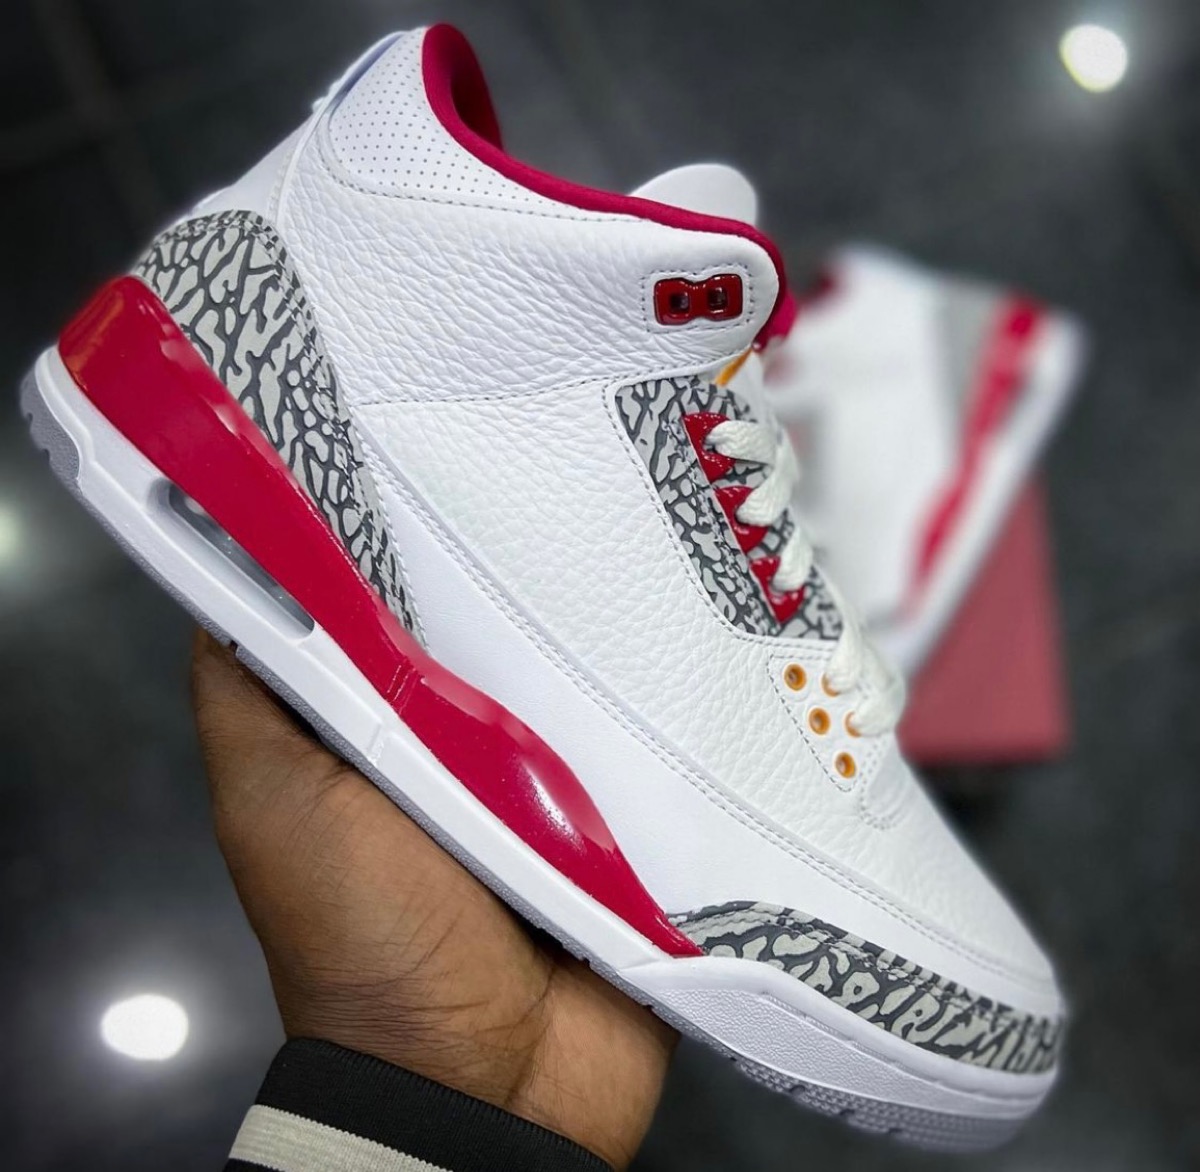 Nike】Air Jordan 3 Retro “Cardinal Red”が国内2月24日に発売予定 